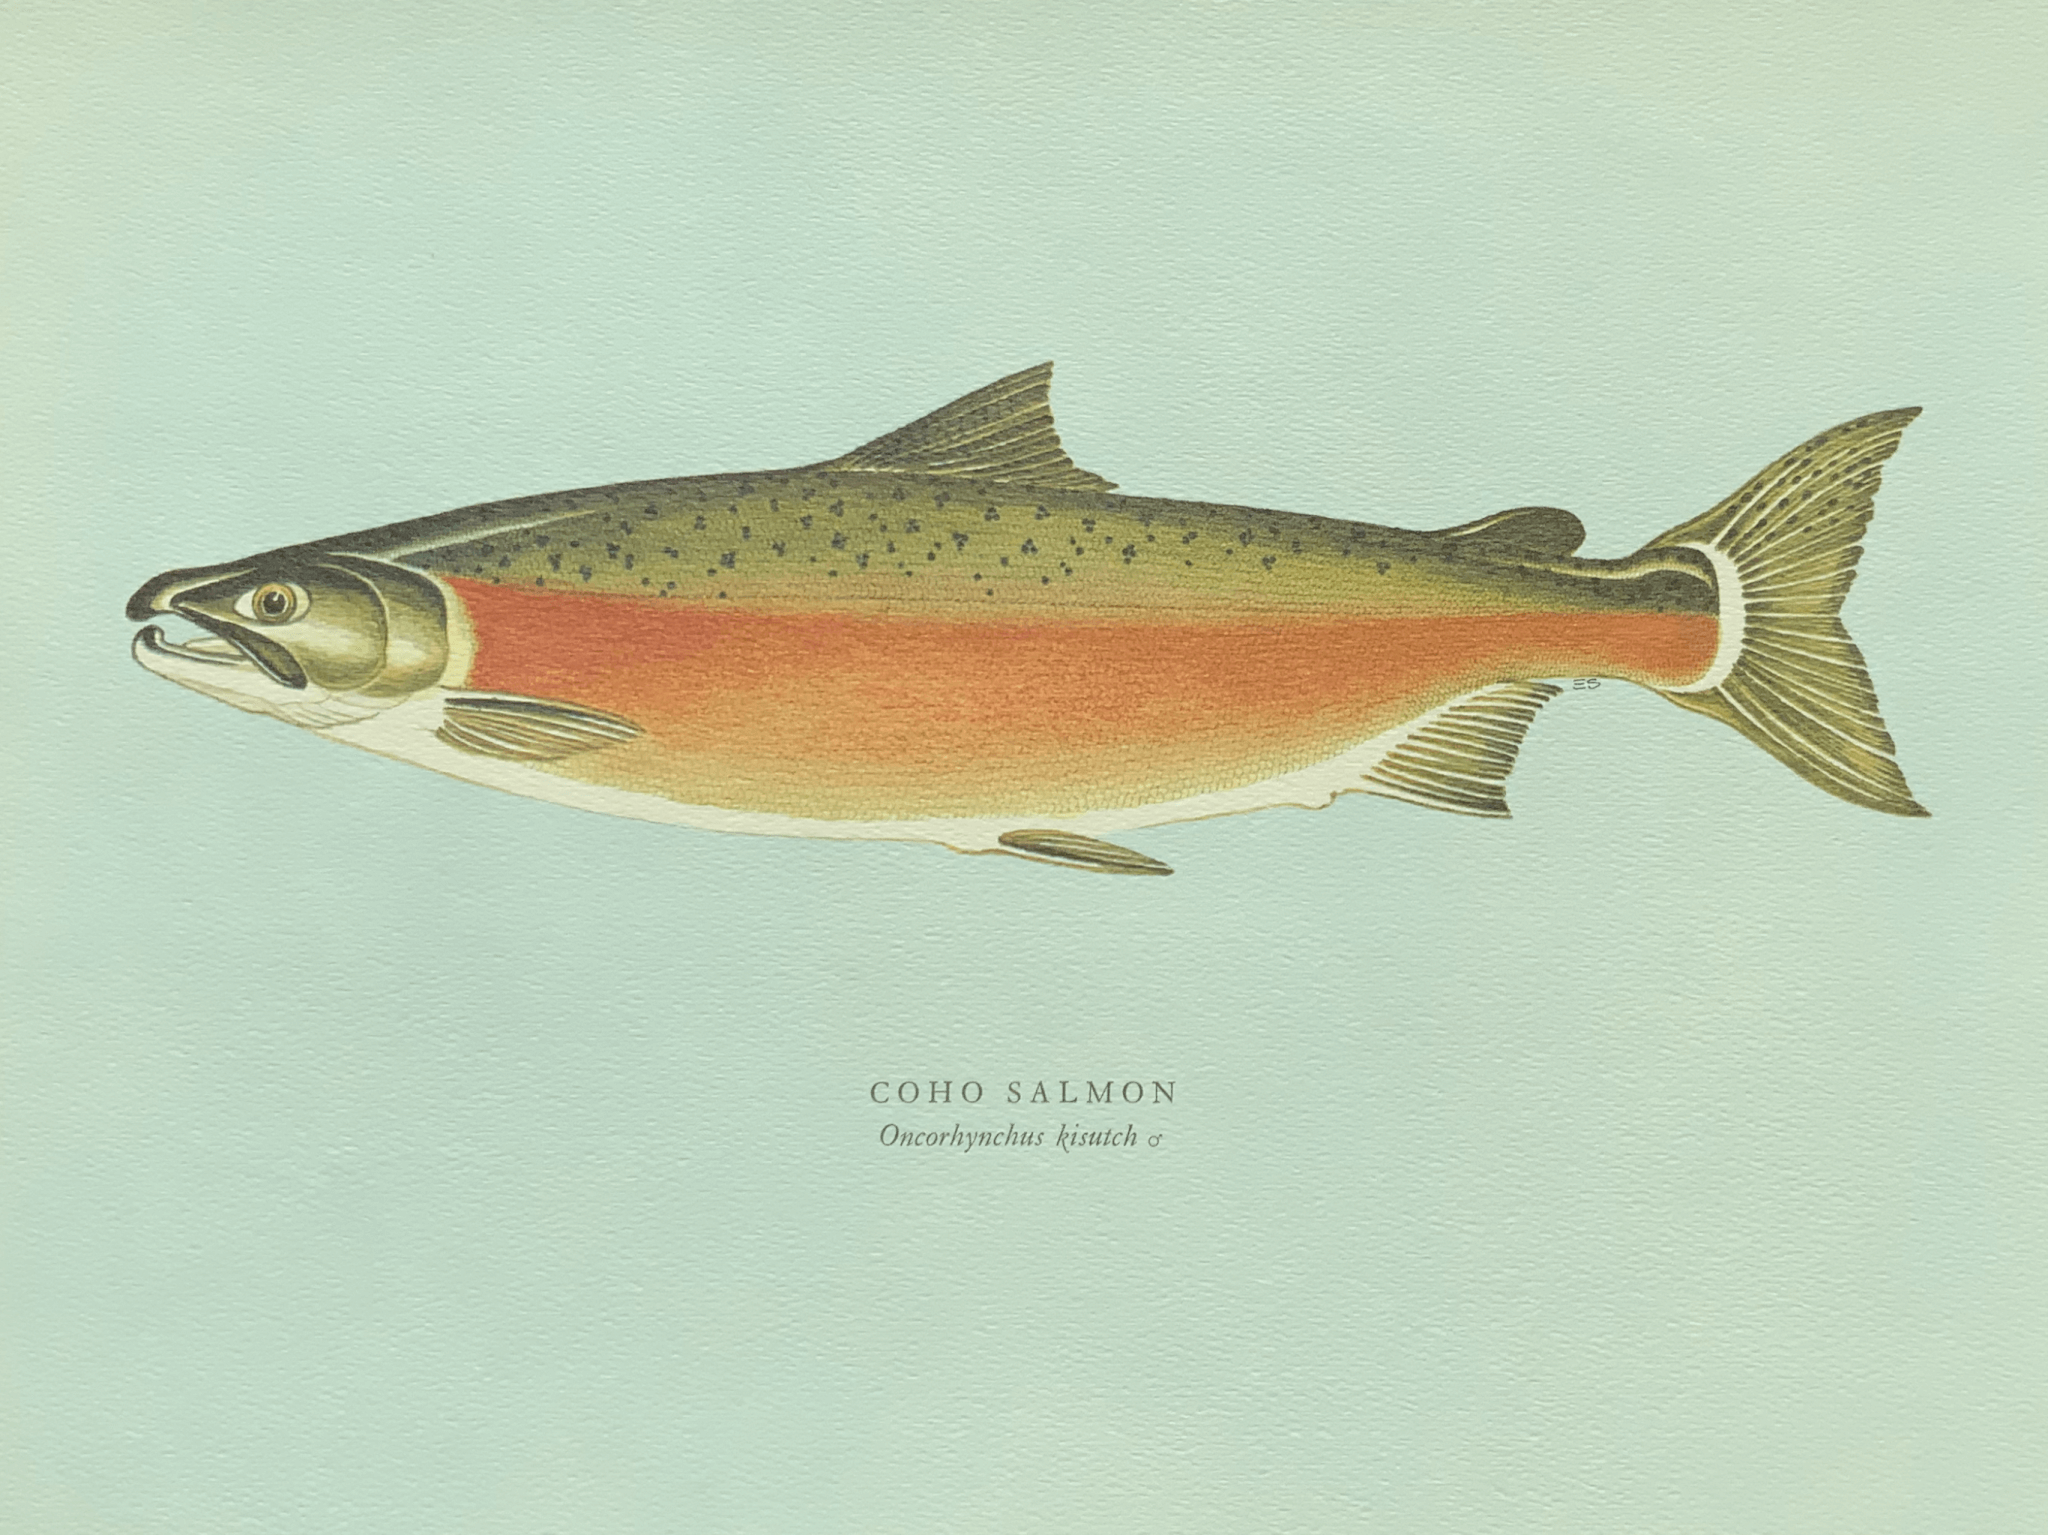 Coho salmon 大麻哈鮭魚 雄性大麻哈鮭魚成熟時身體轉紅，背部轉綠。 繁殖期由十月至十二月，甚至晚至二月。